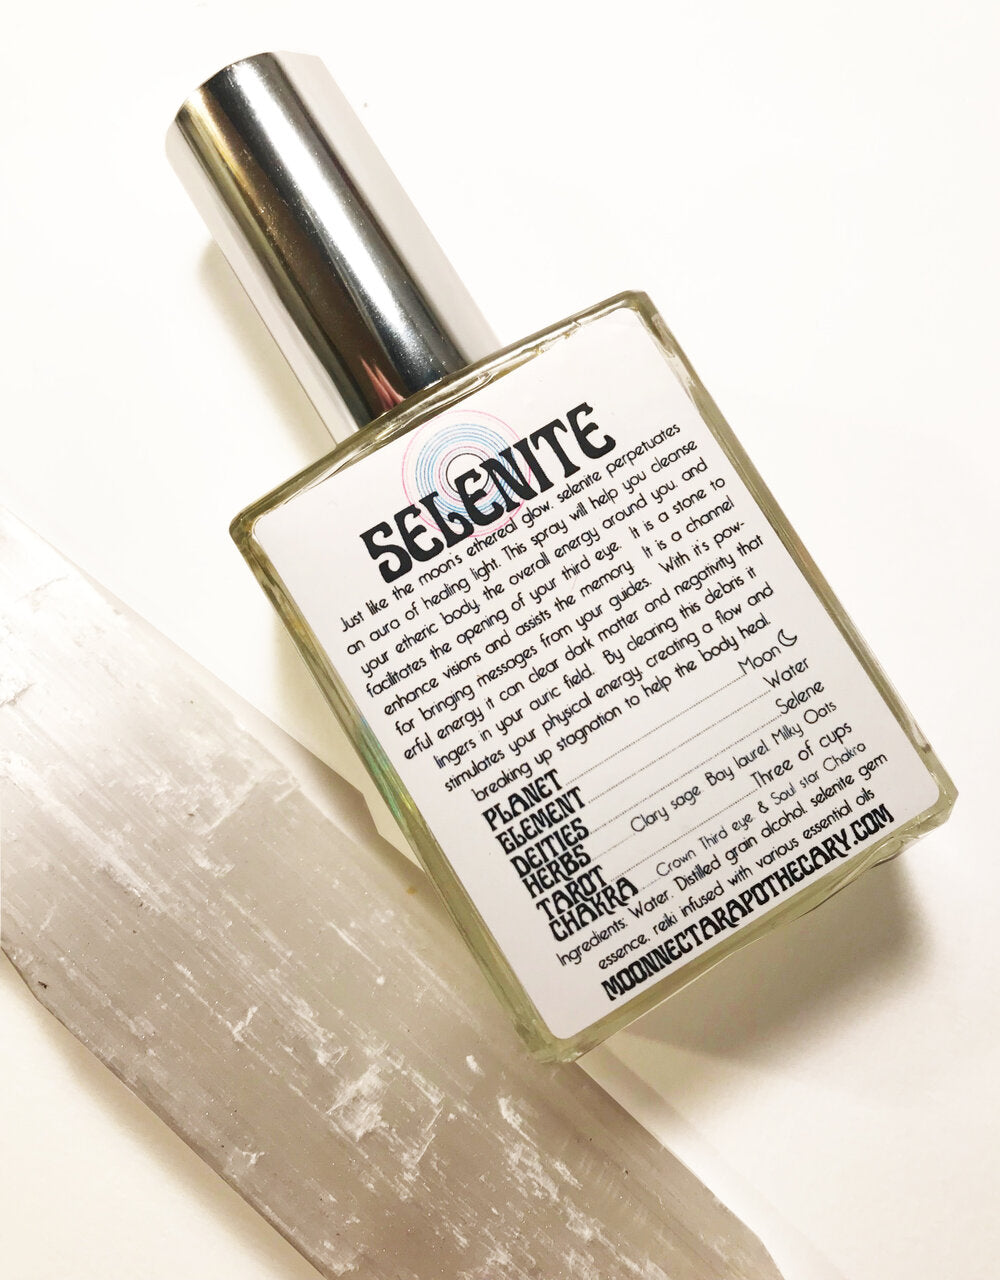 Selenite spray bottle next to a selenite wand crystal.